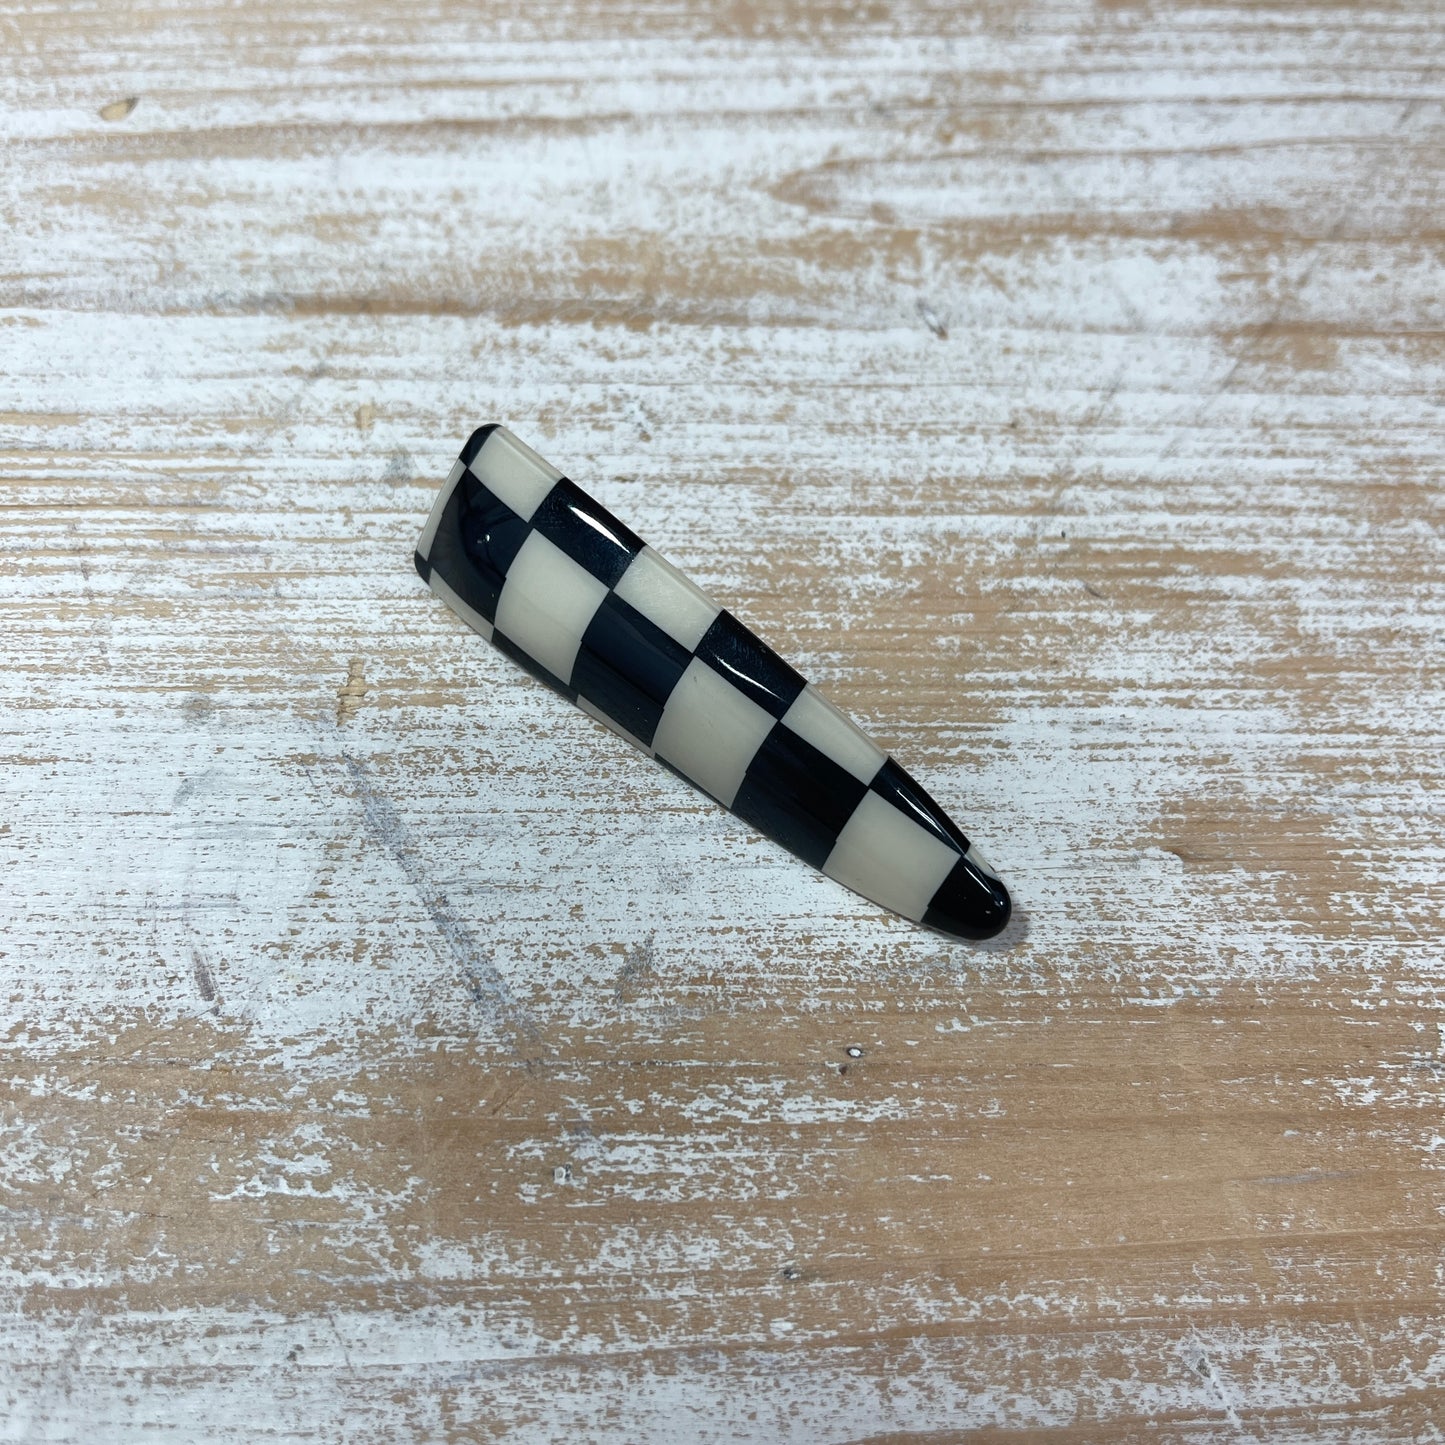 Céleste Hair Clip (2.5 inch) - Black/White Checkered